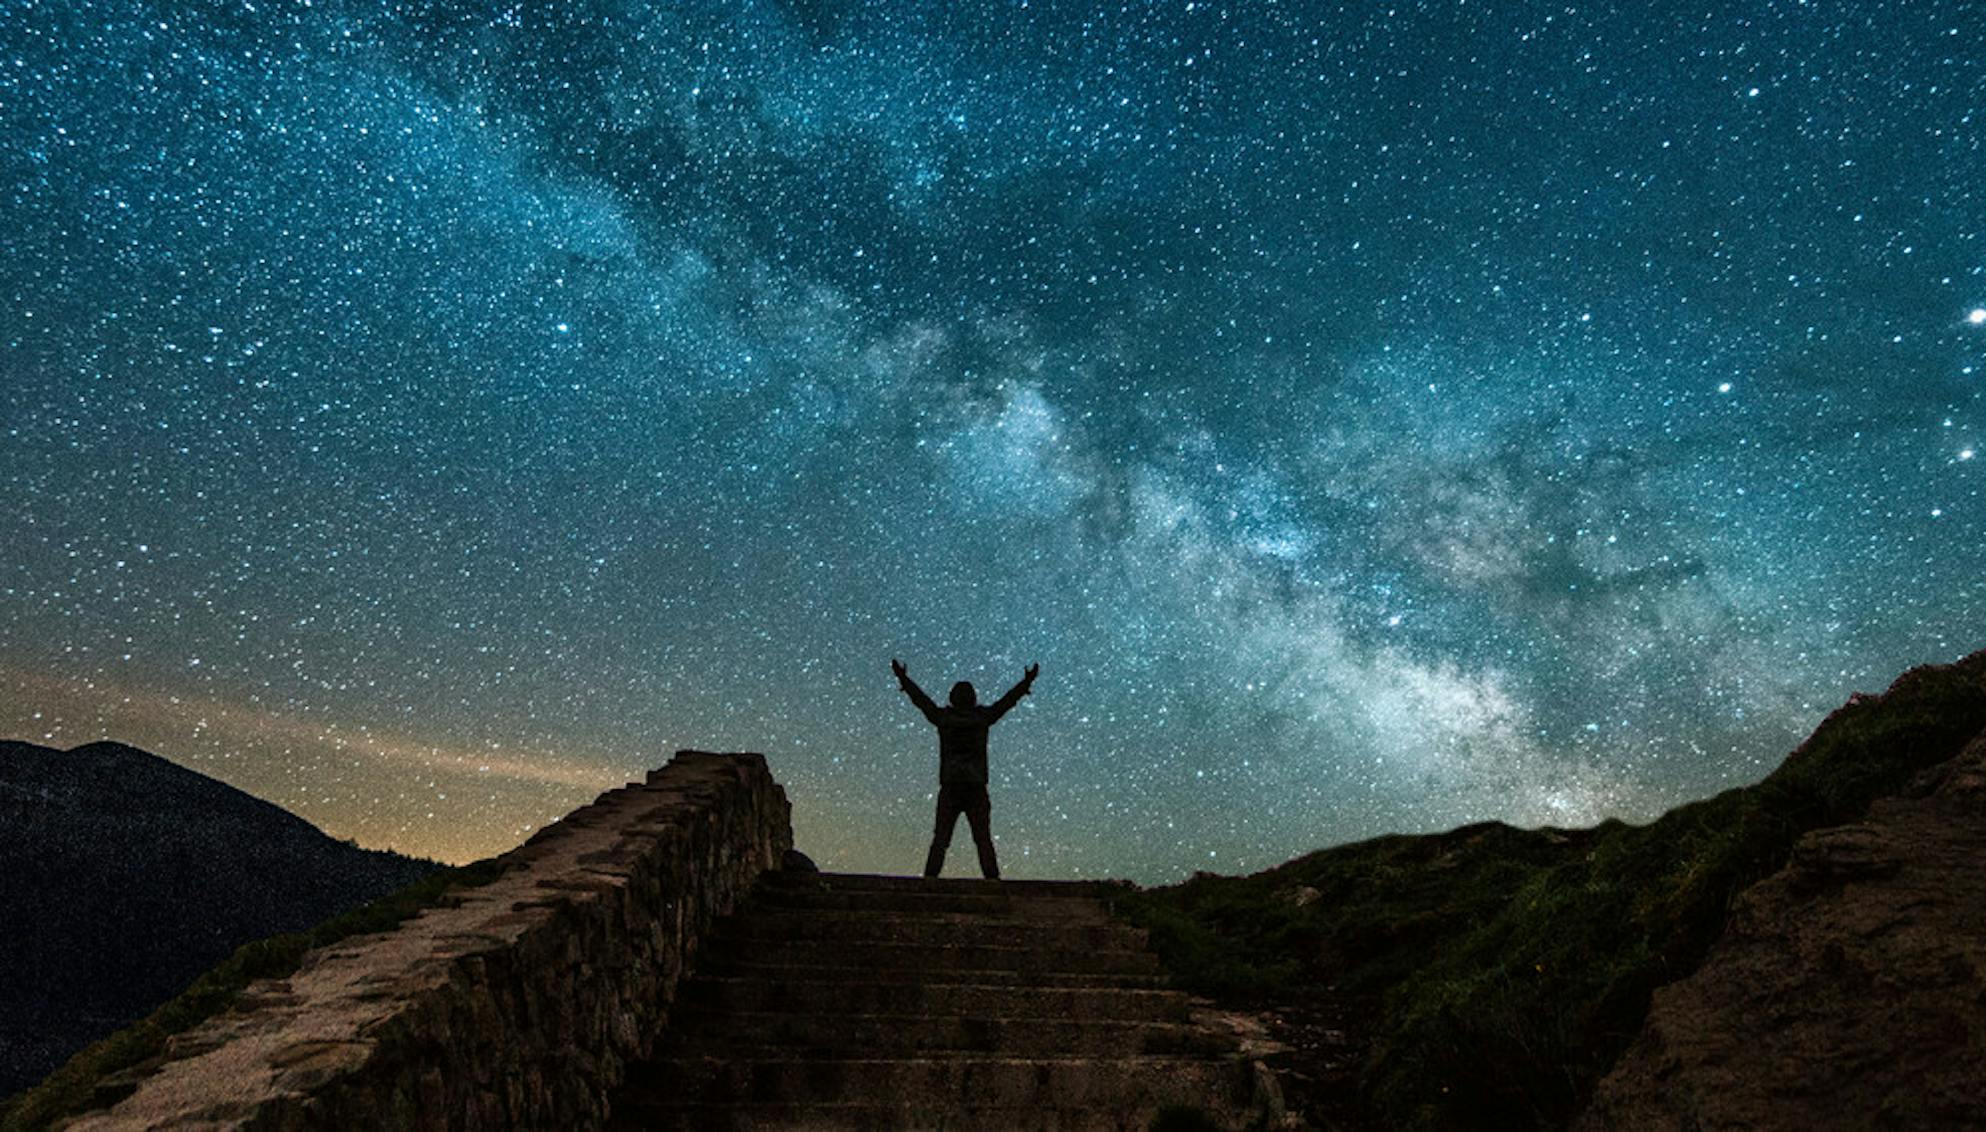 Man standing in the desert raising his hands towards the Milky Way galaxy